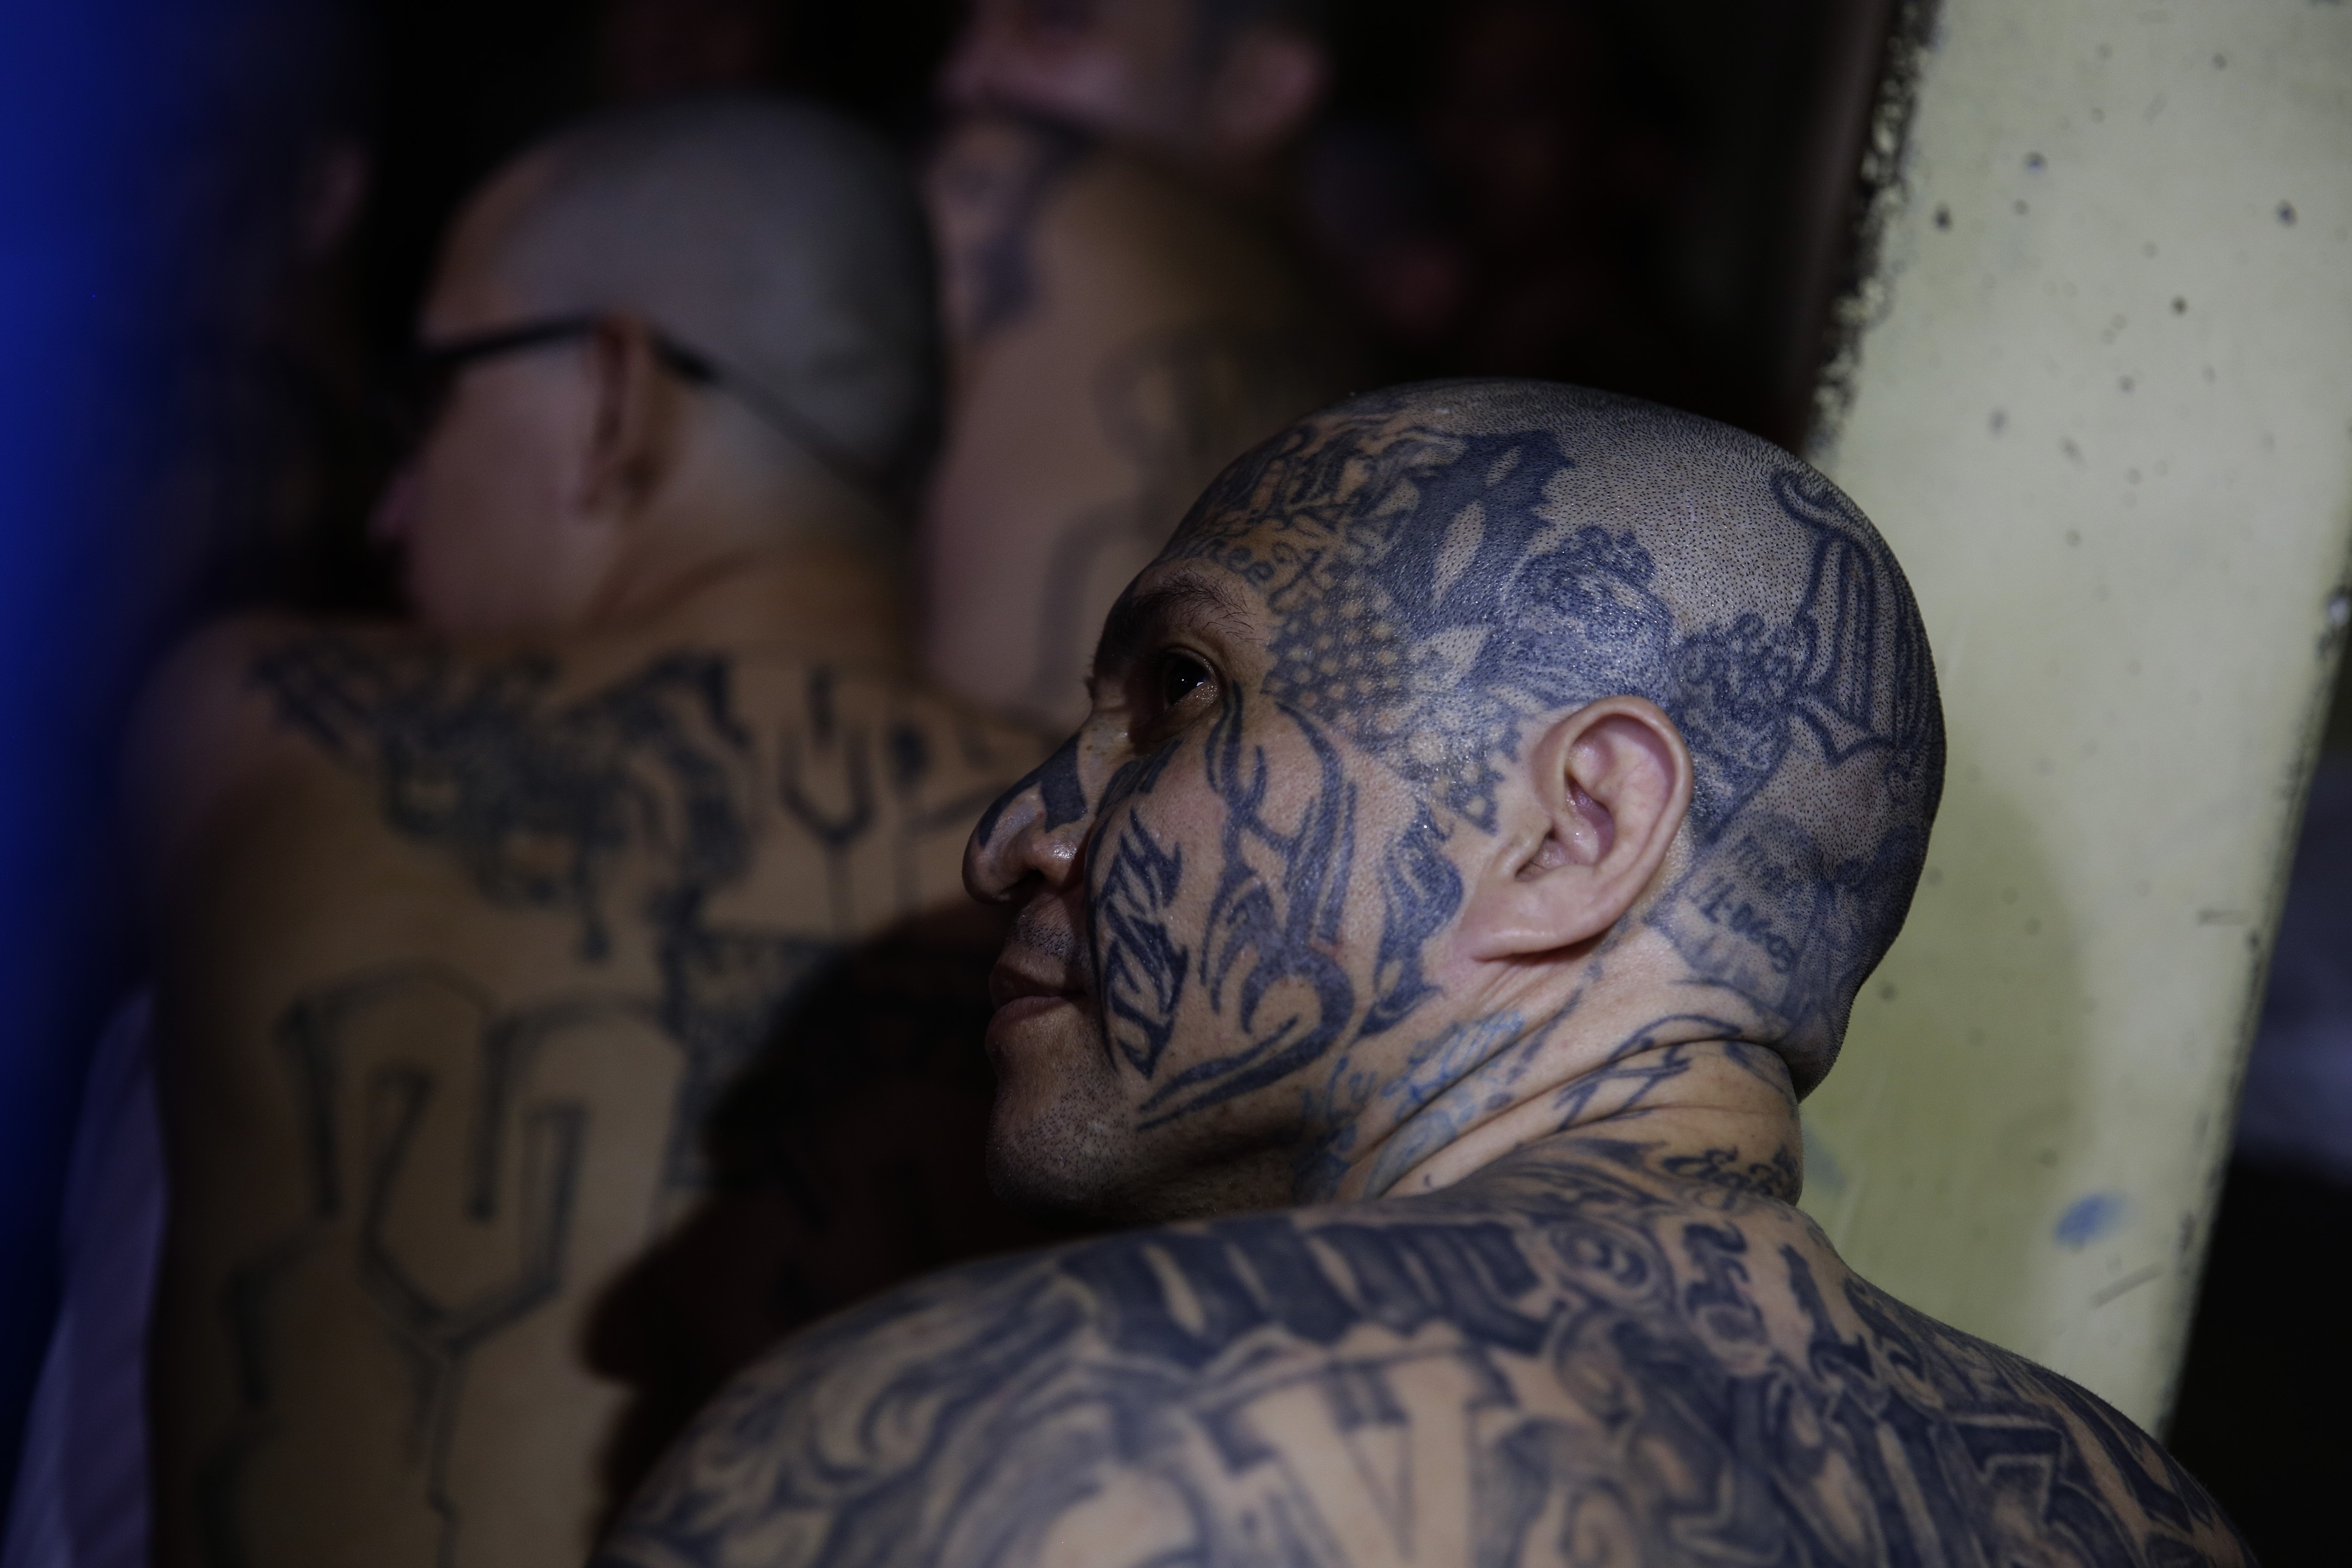 Gang members from barrio 18 in a cell at the penitentiary complex in izalco, el salvador (efe/rodrigo sura/file)